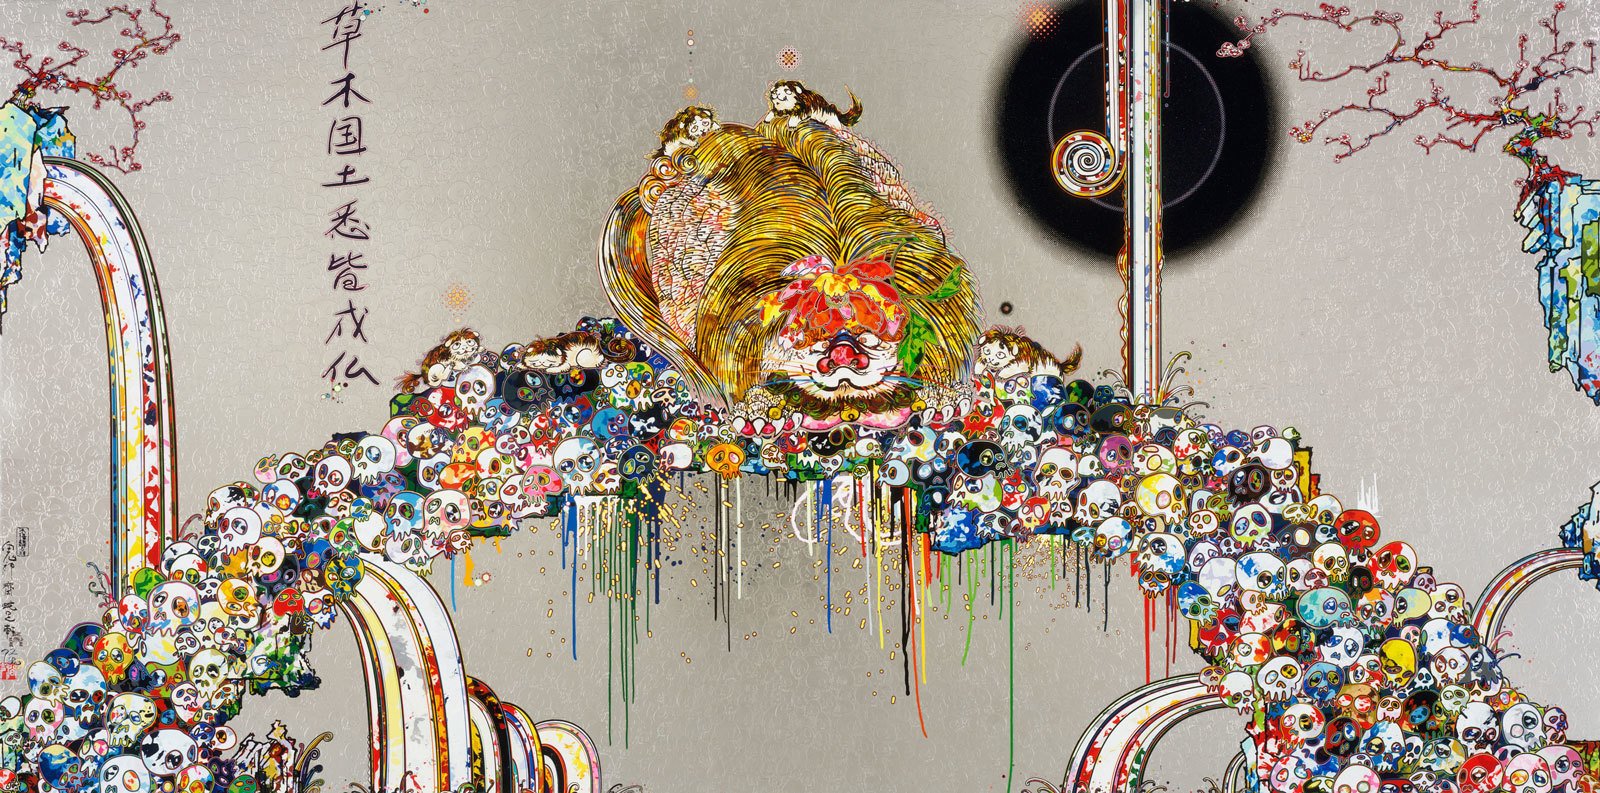 Takashi MurakamiLion Peering into Death's Abyss, 2015Acrylic, gold leaf and platinum leaf and gold on canvas mounted on aluminum frame150 &times; 300 cmCourtesy Perrotin&copy; 2015 Takashi Murakami/Kaikai Kiki Co., Ltd. All Rights Reserved.